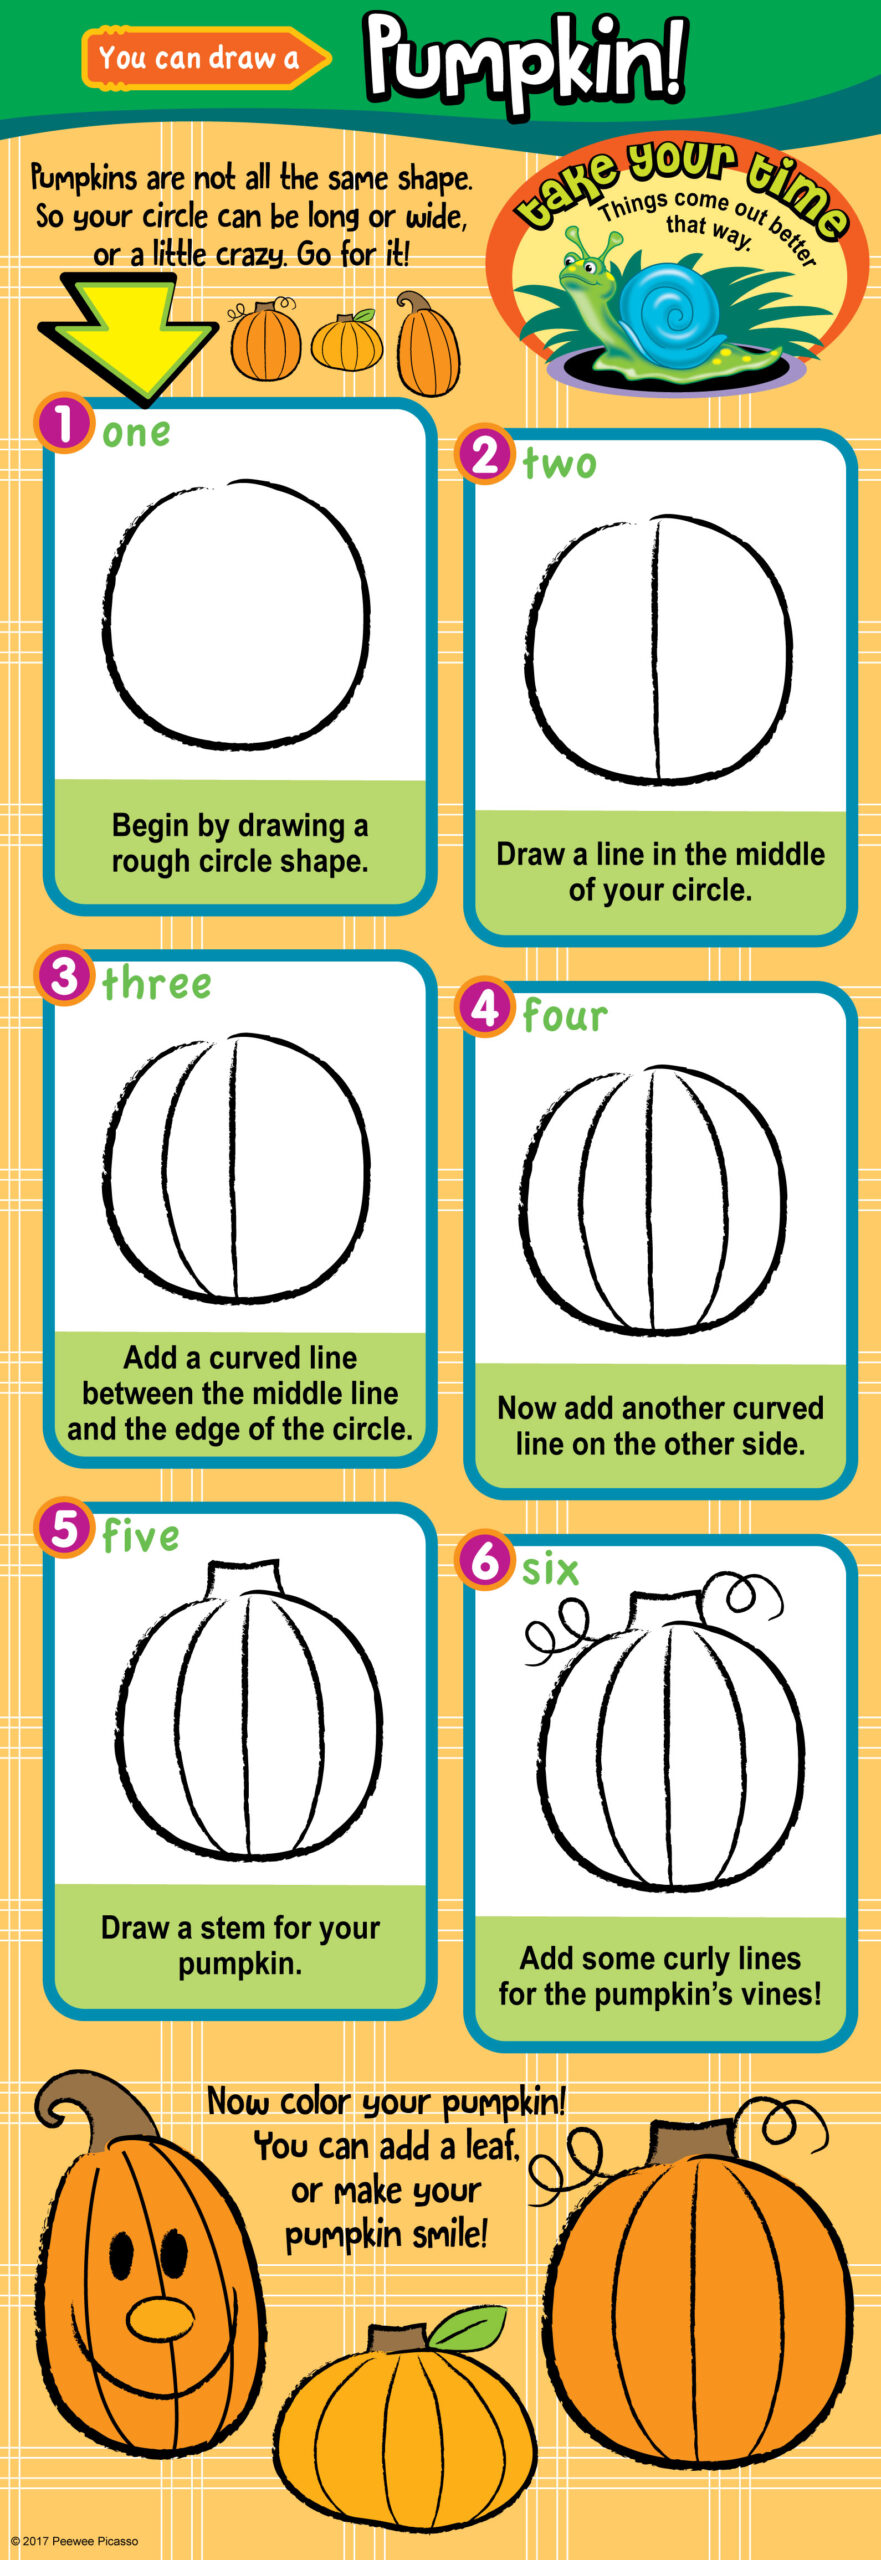 steps to draw a cute pumpkin easy